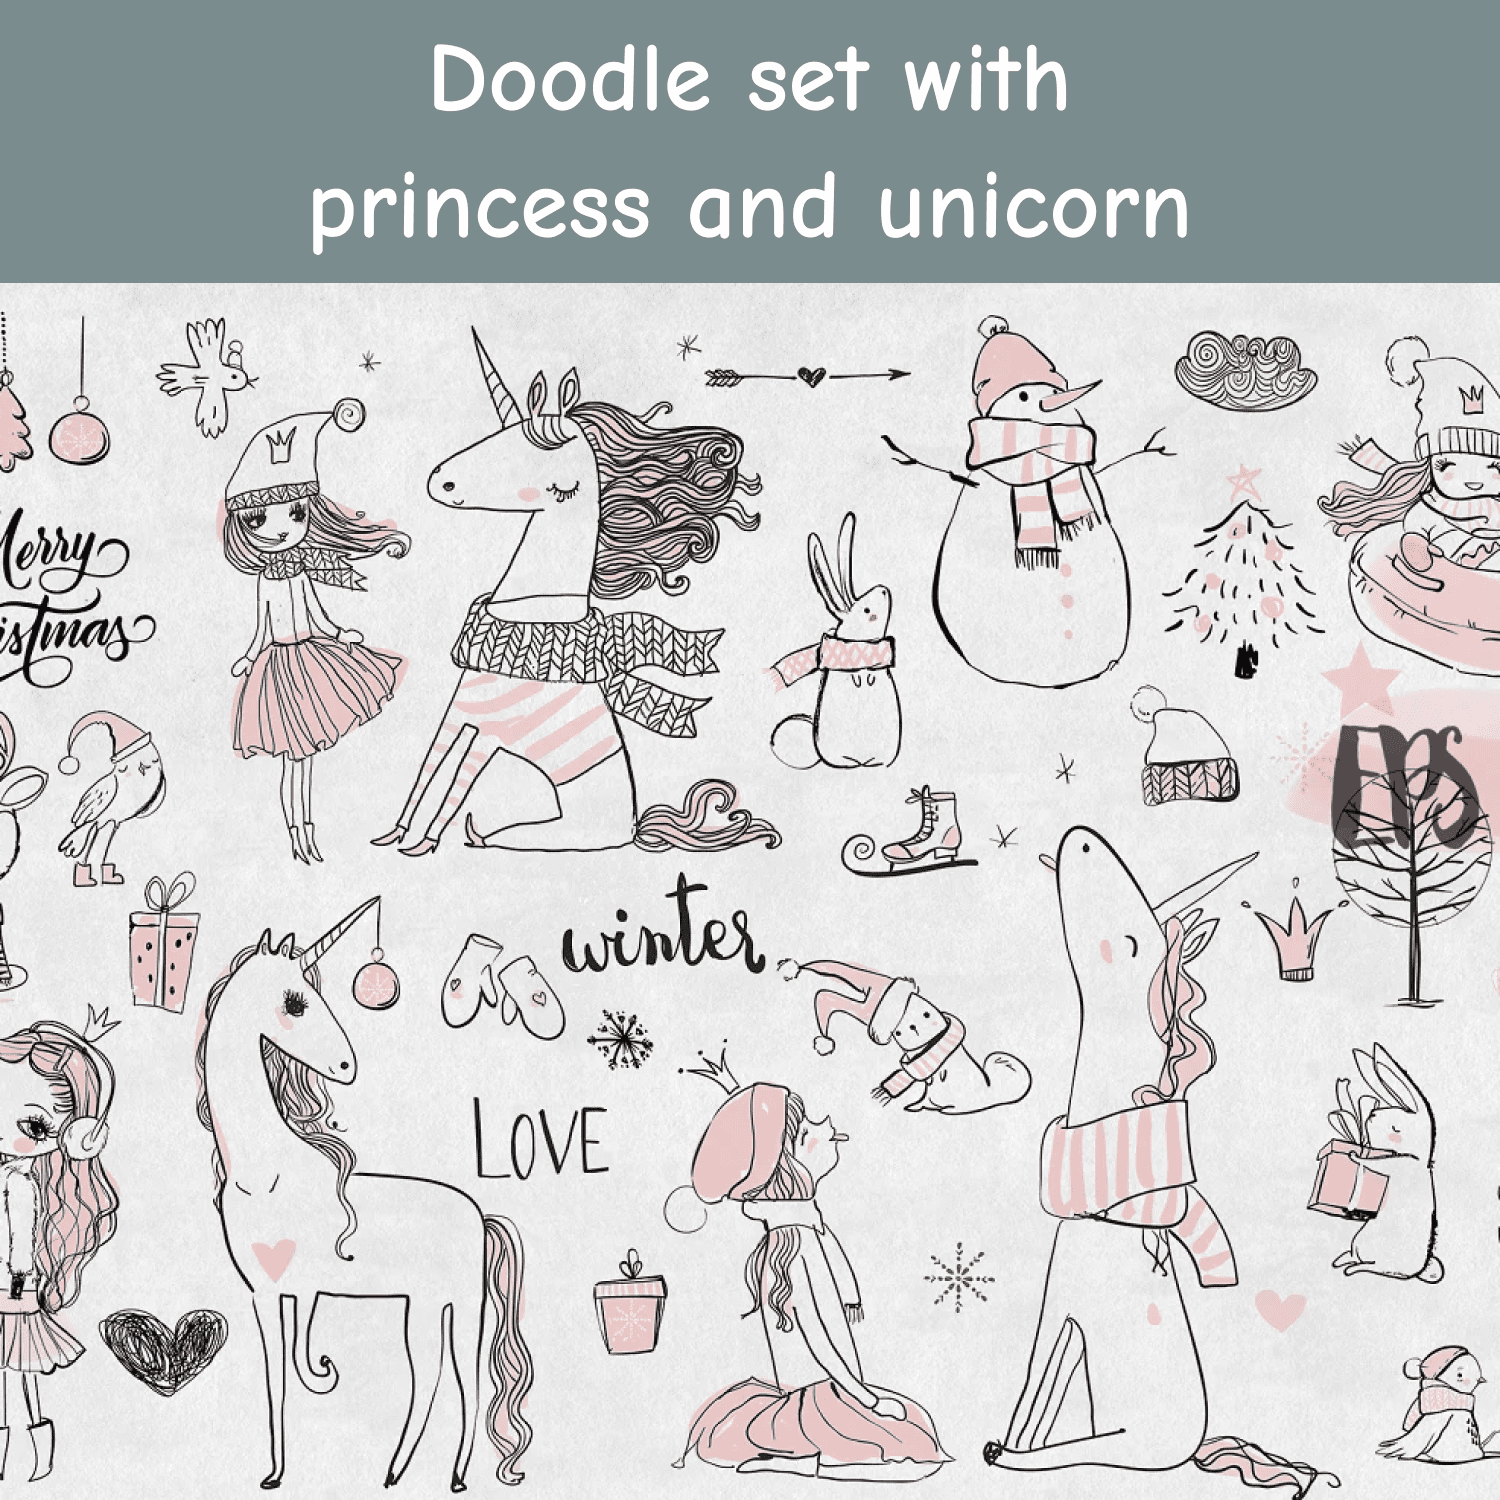 doodle set with princess and unicorn.